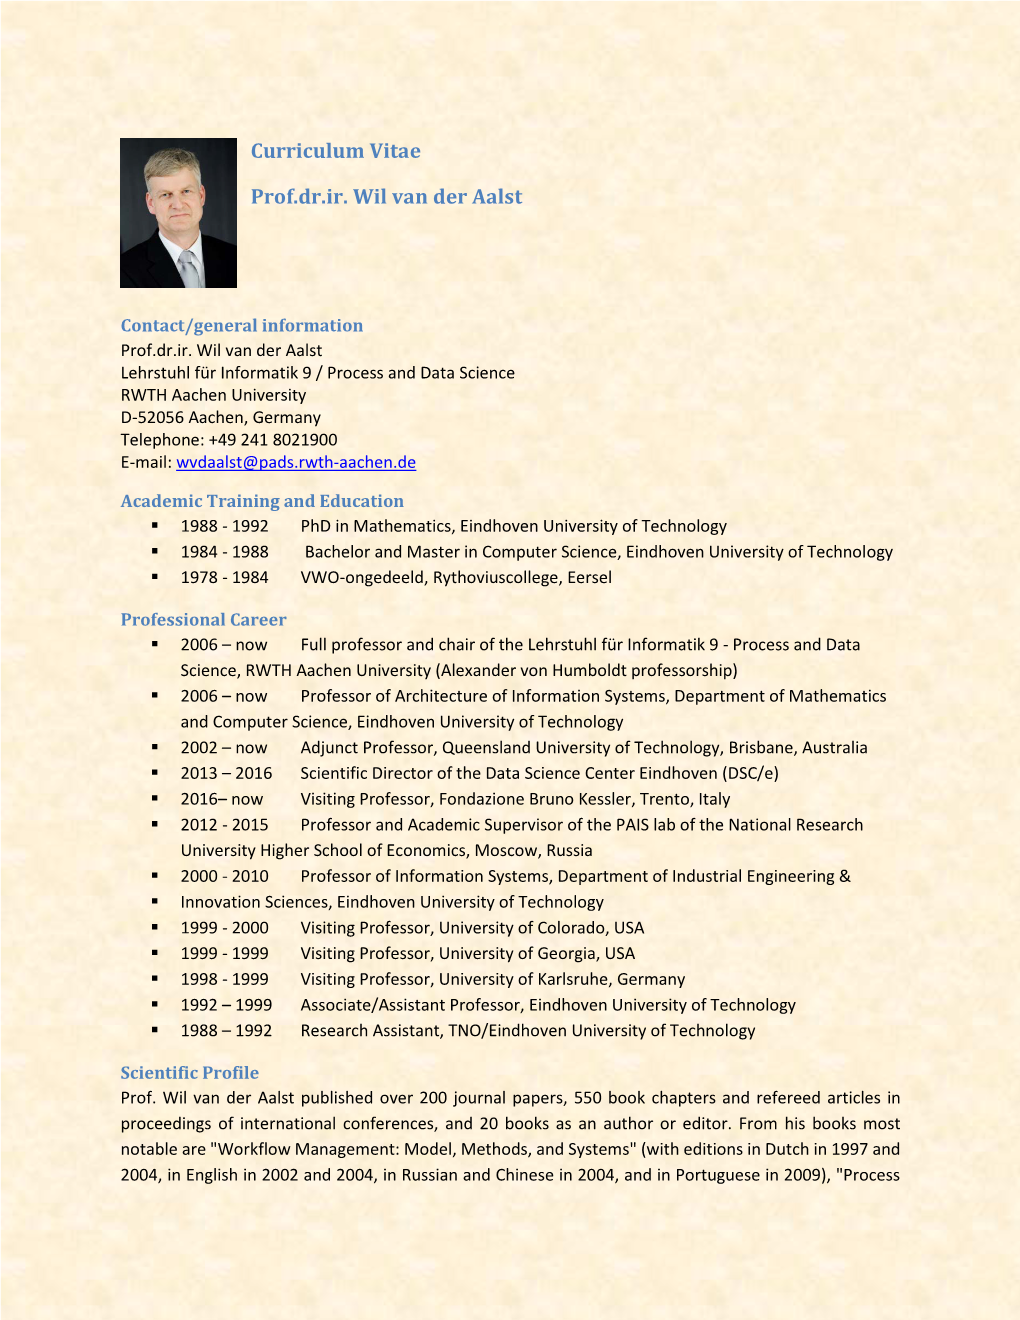 Curriculum Vitae Prof.Dr.Ir. Wil Van Der Aalst